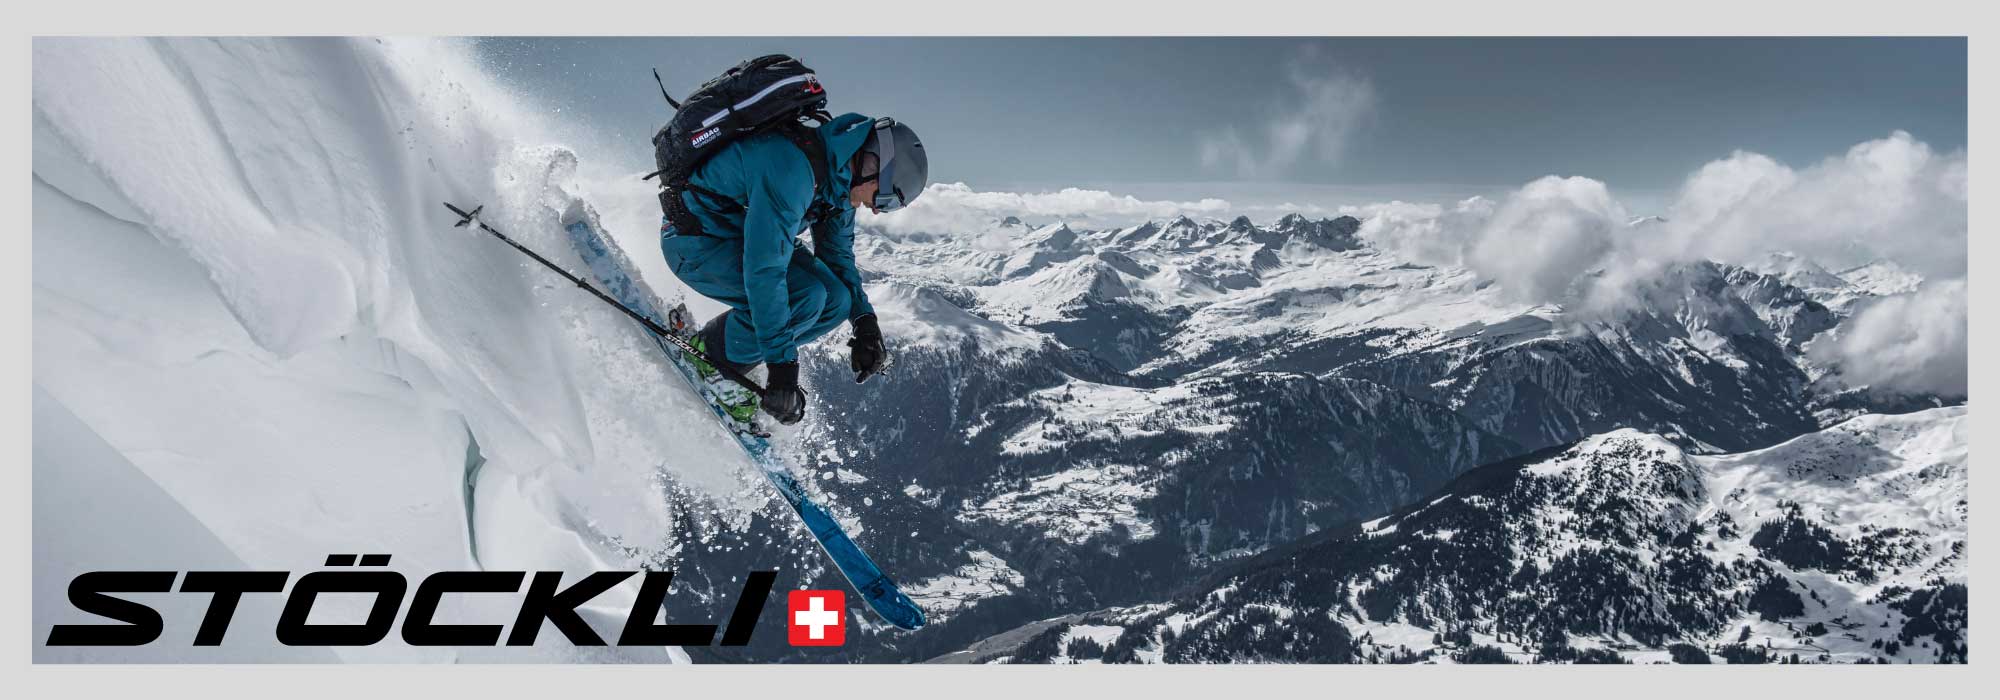 Skifahrer-beim-Freeriding